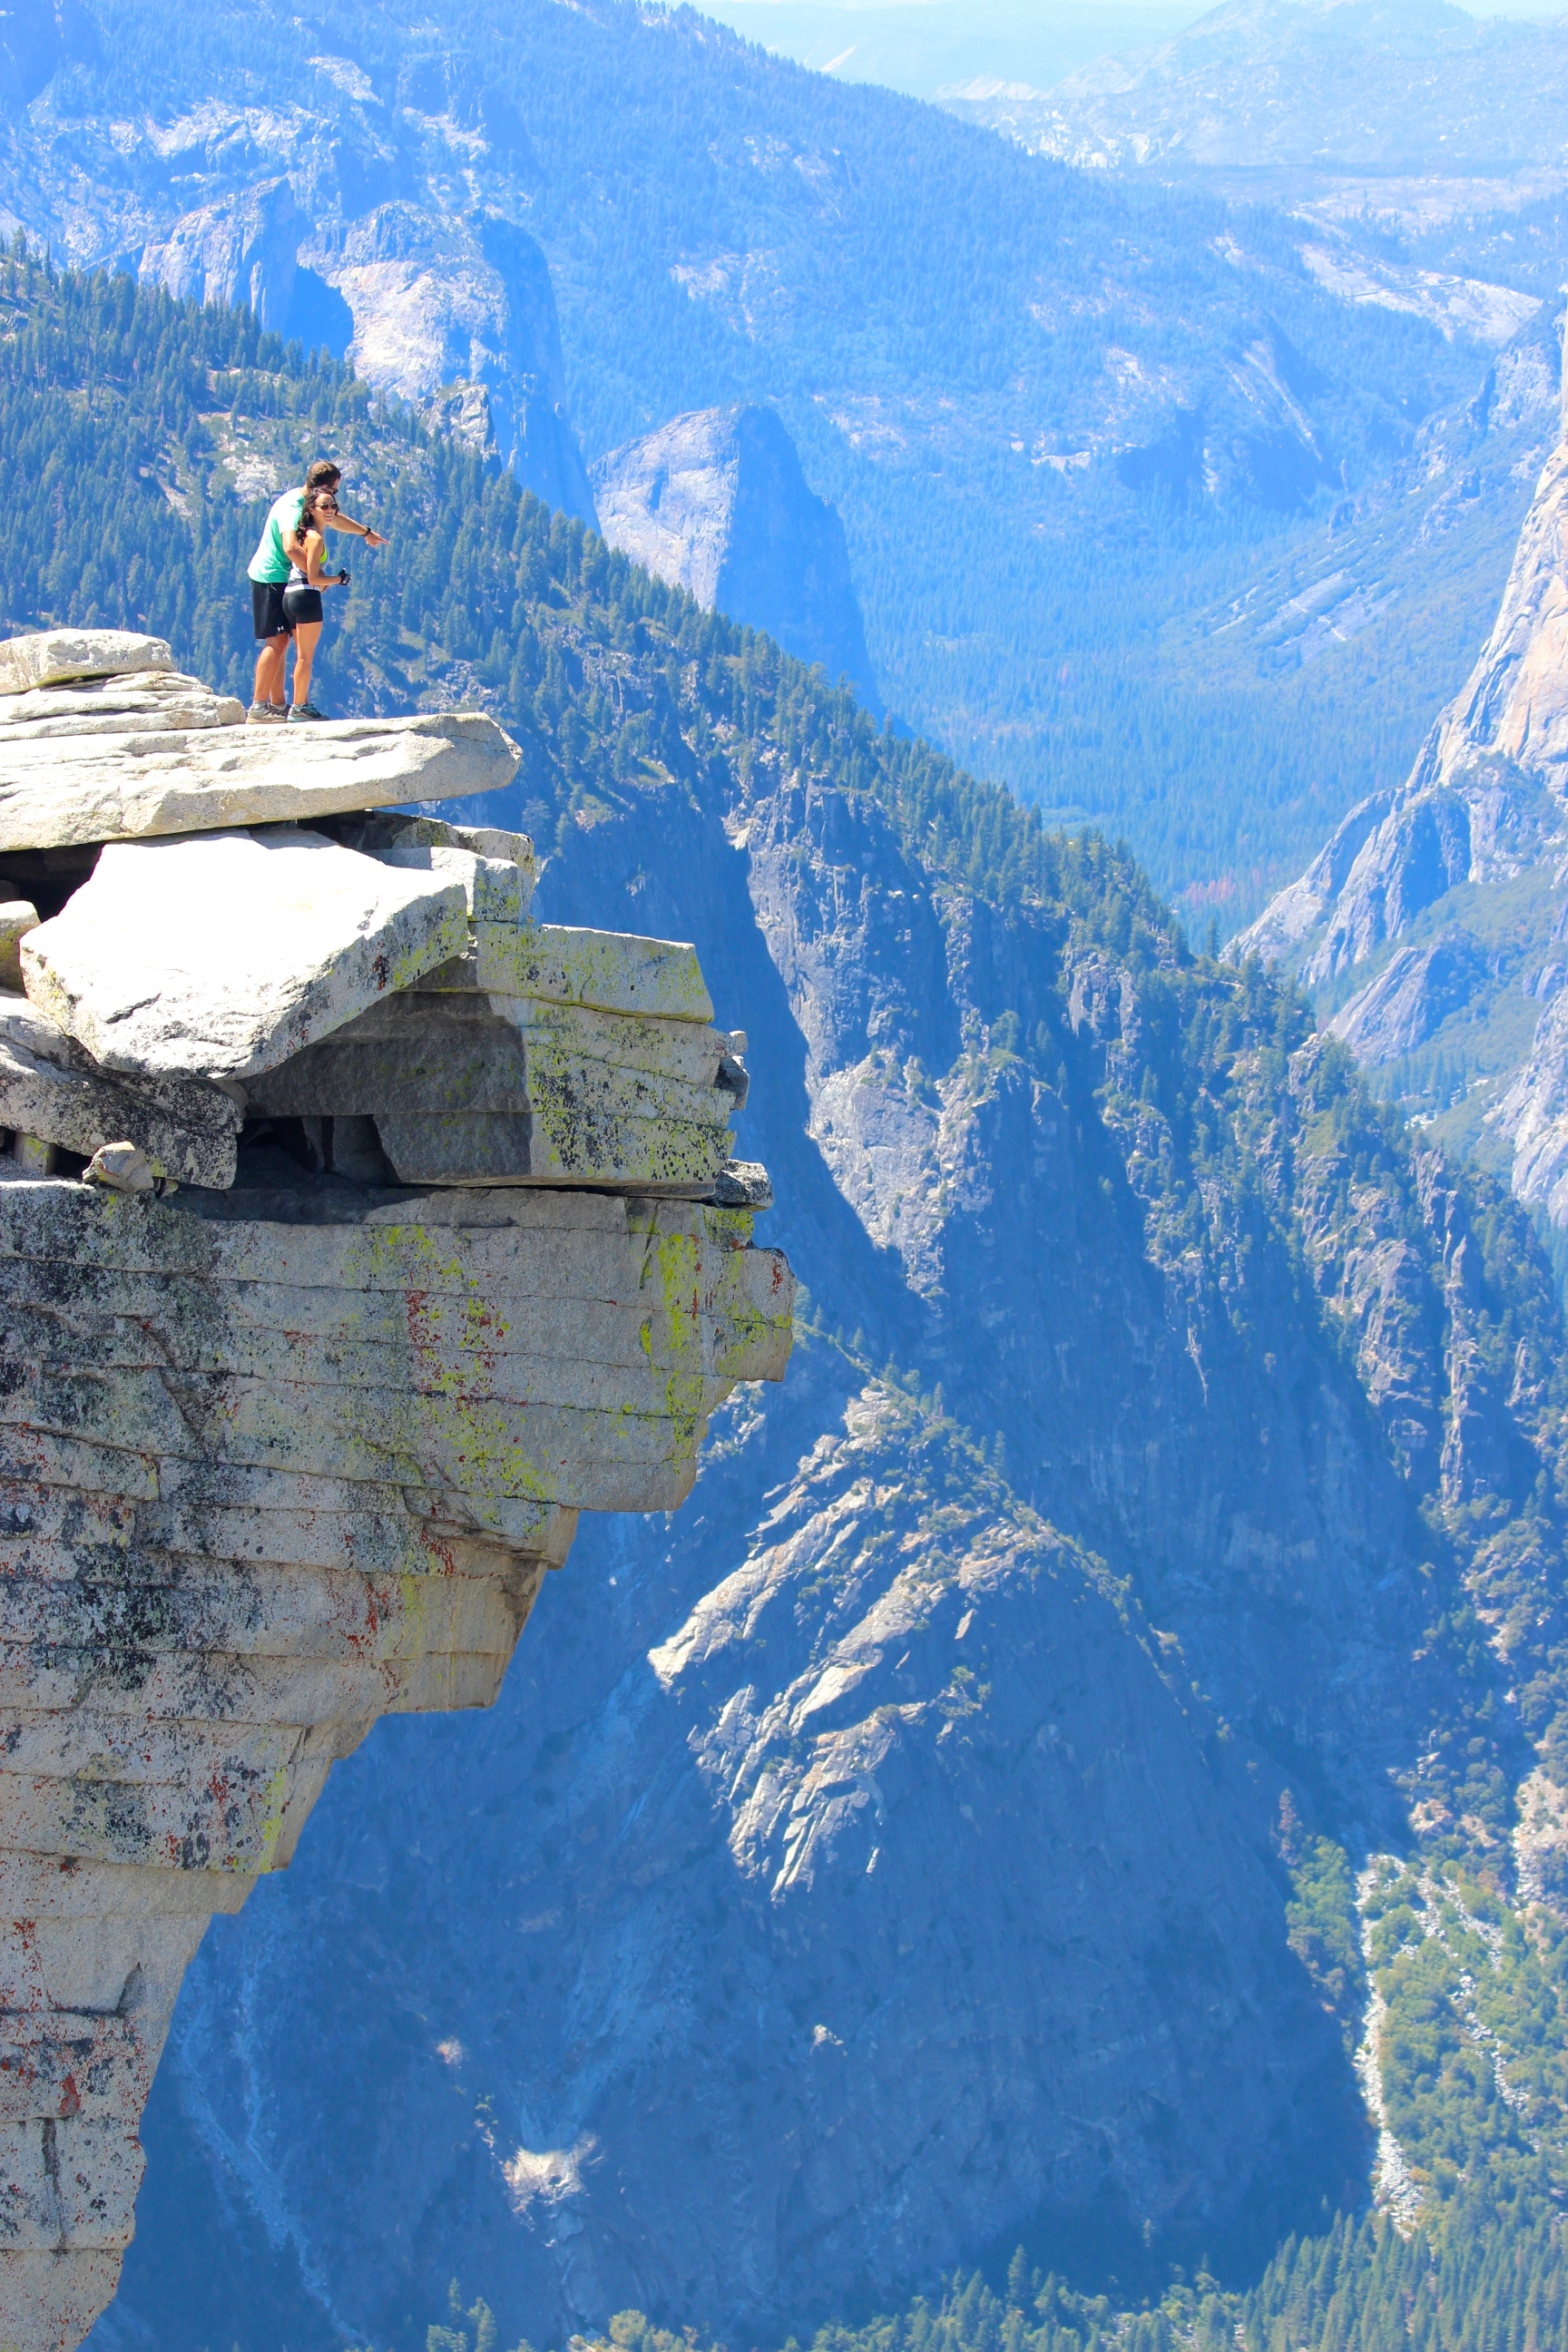 Yosemite National Park: Hiking Half Dome, Part 1